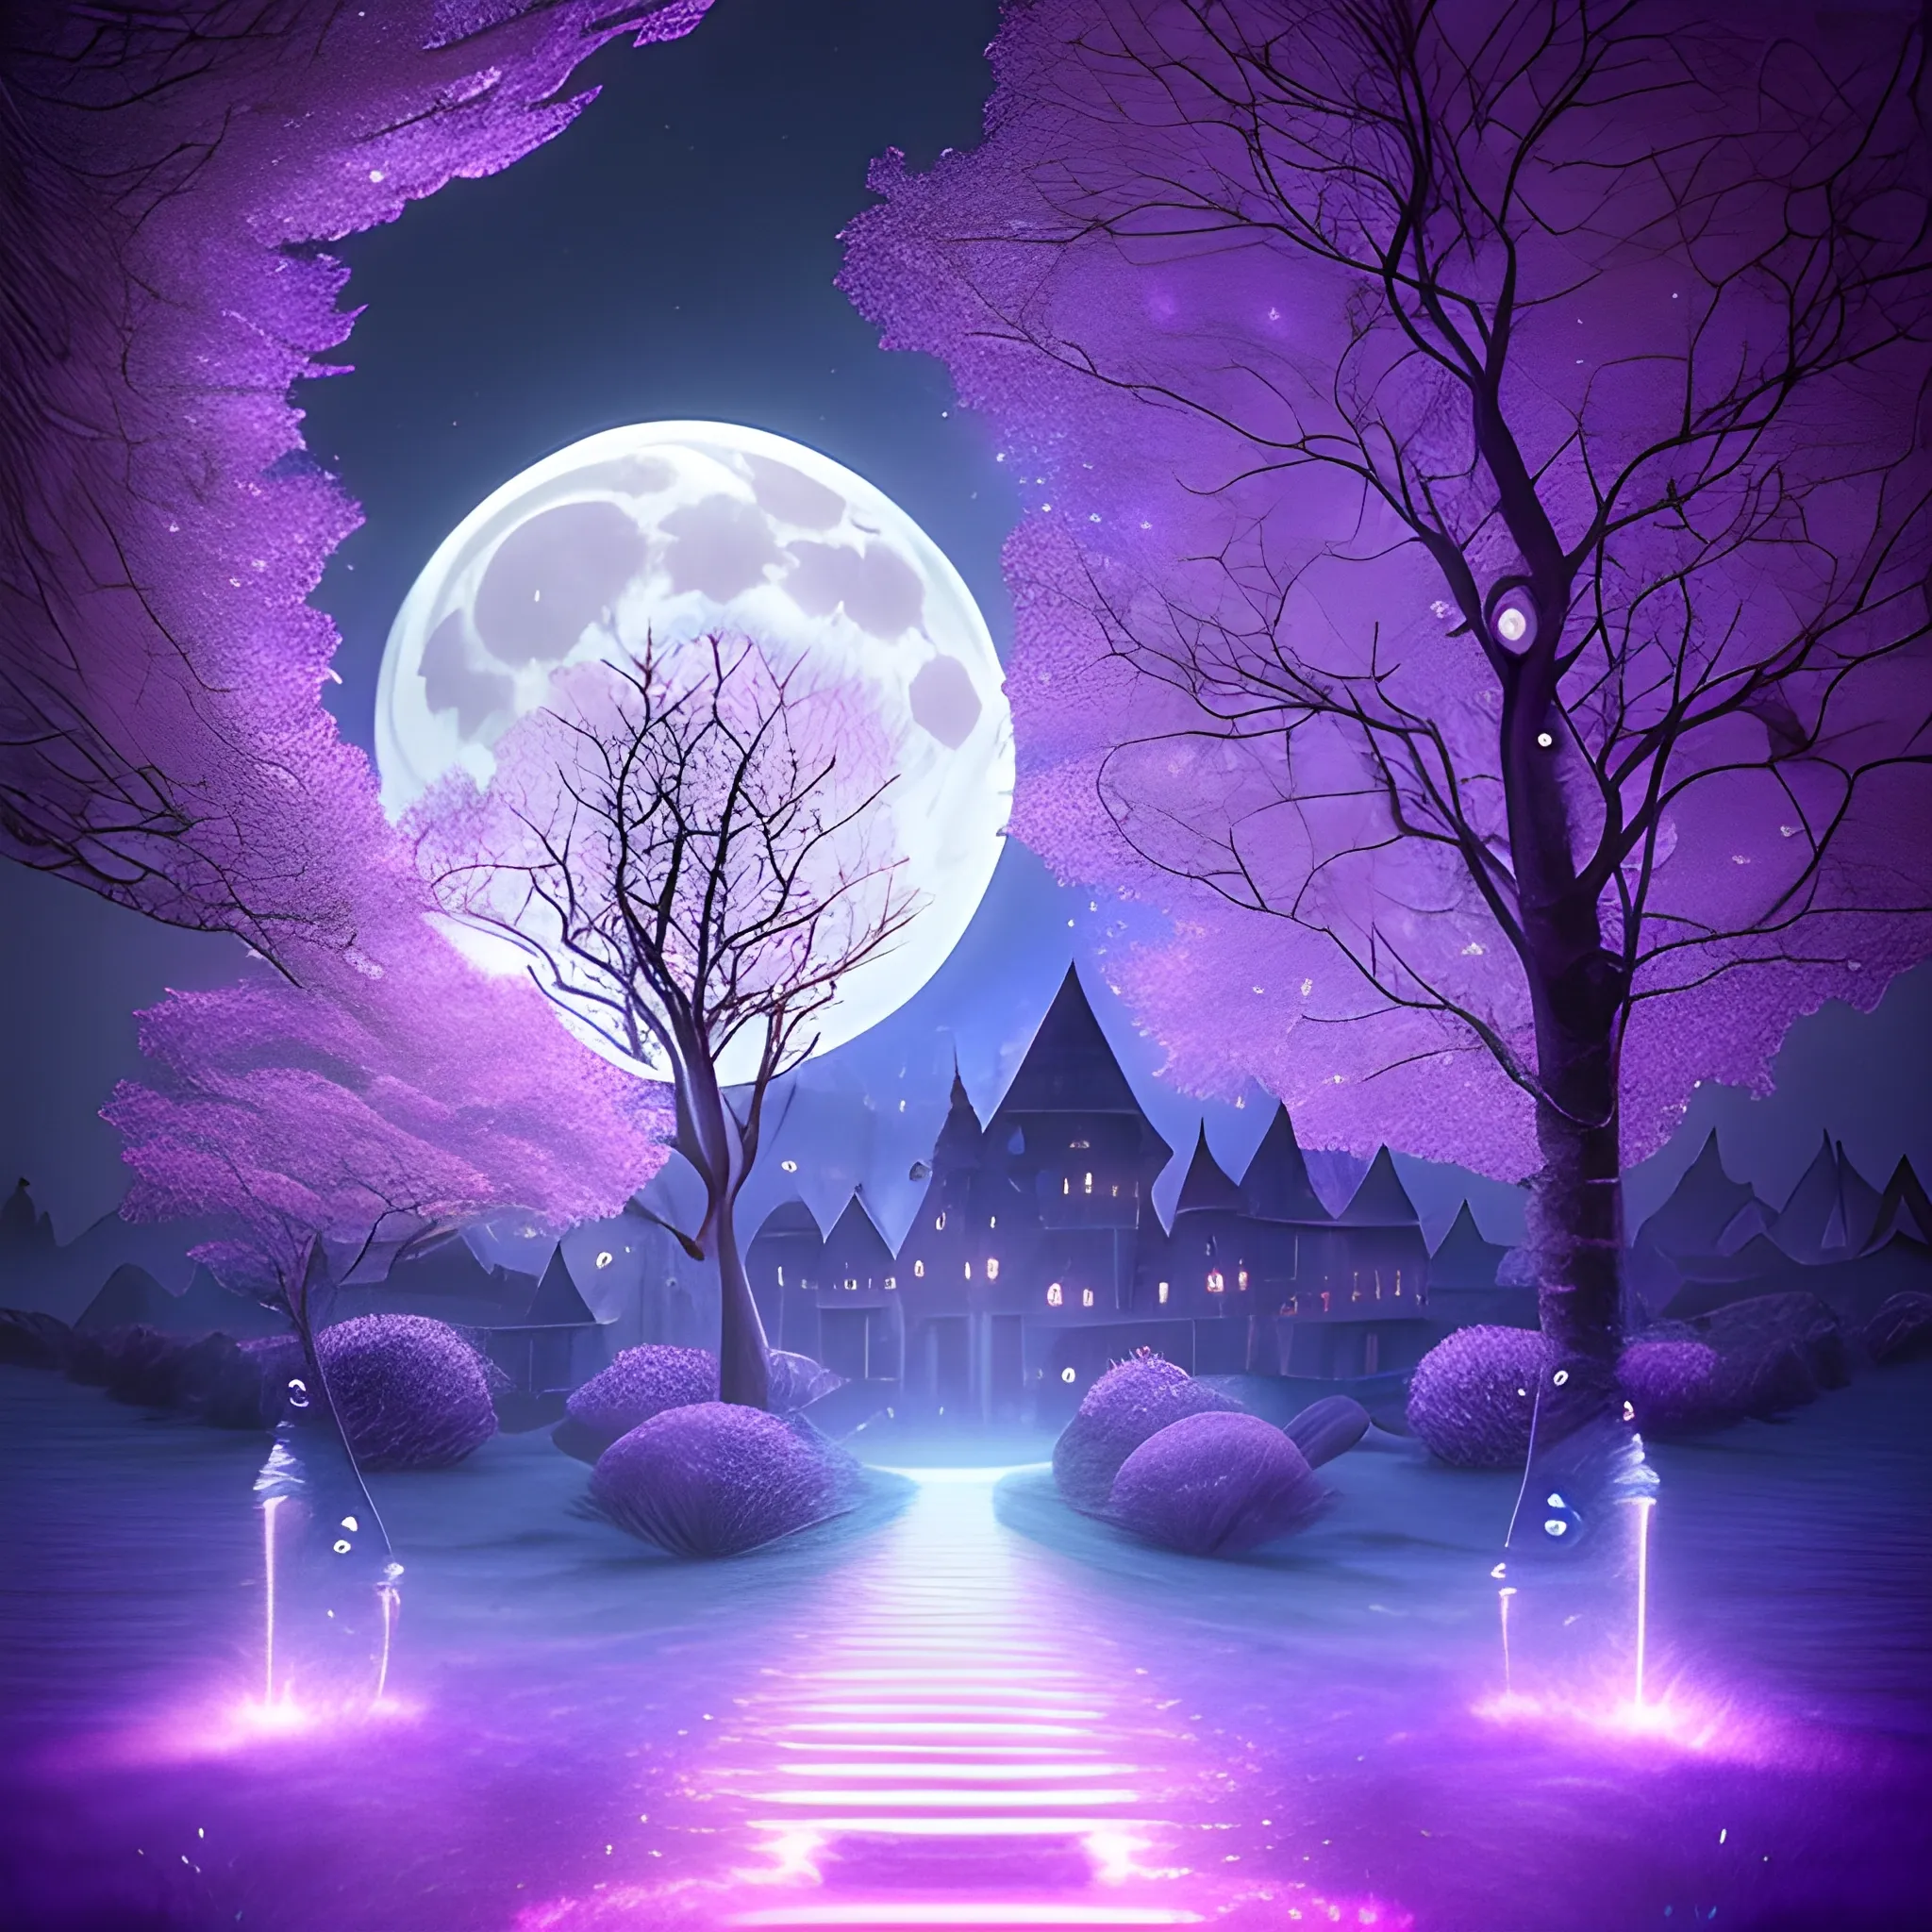 Envision a world where the moonlight possesses enchanting qualit ...